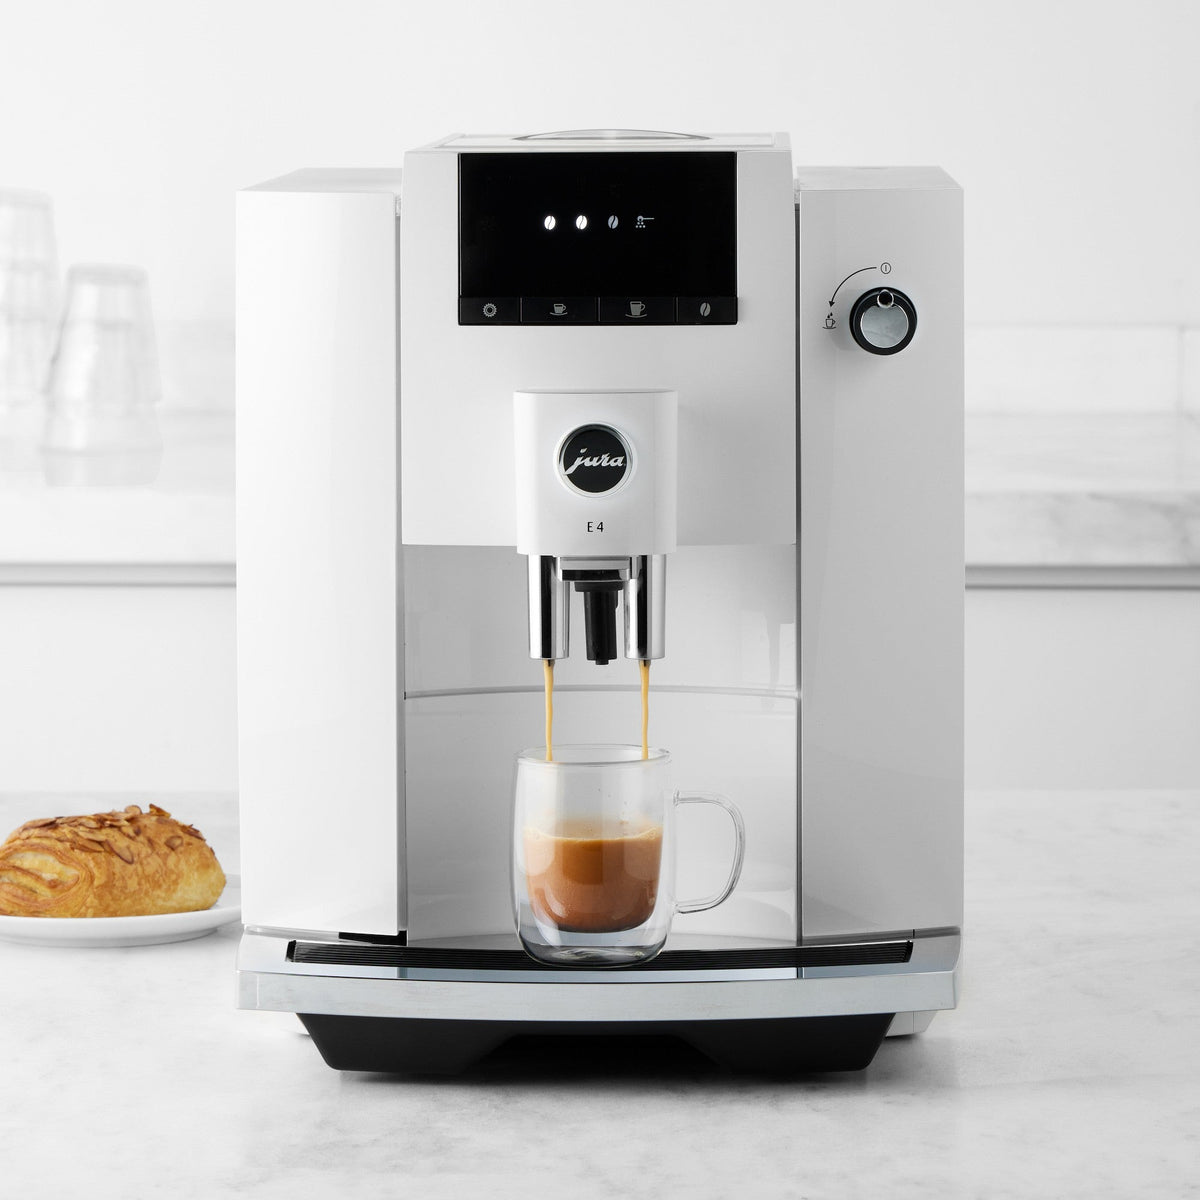 JURA – Machine Fully Tarzianwestforhousewares Espresso Automatic E4